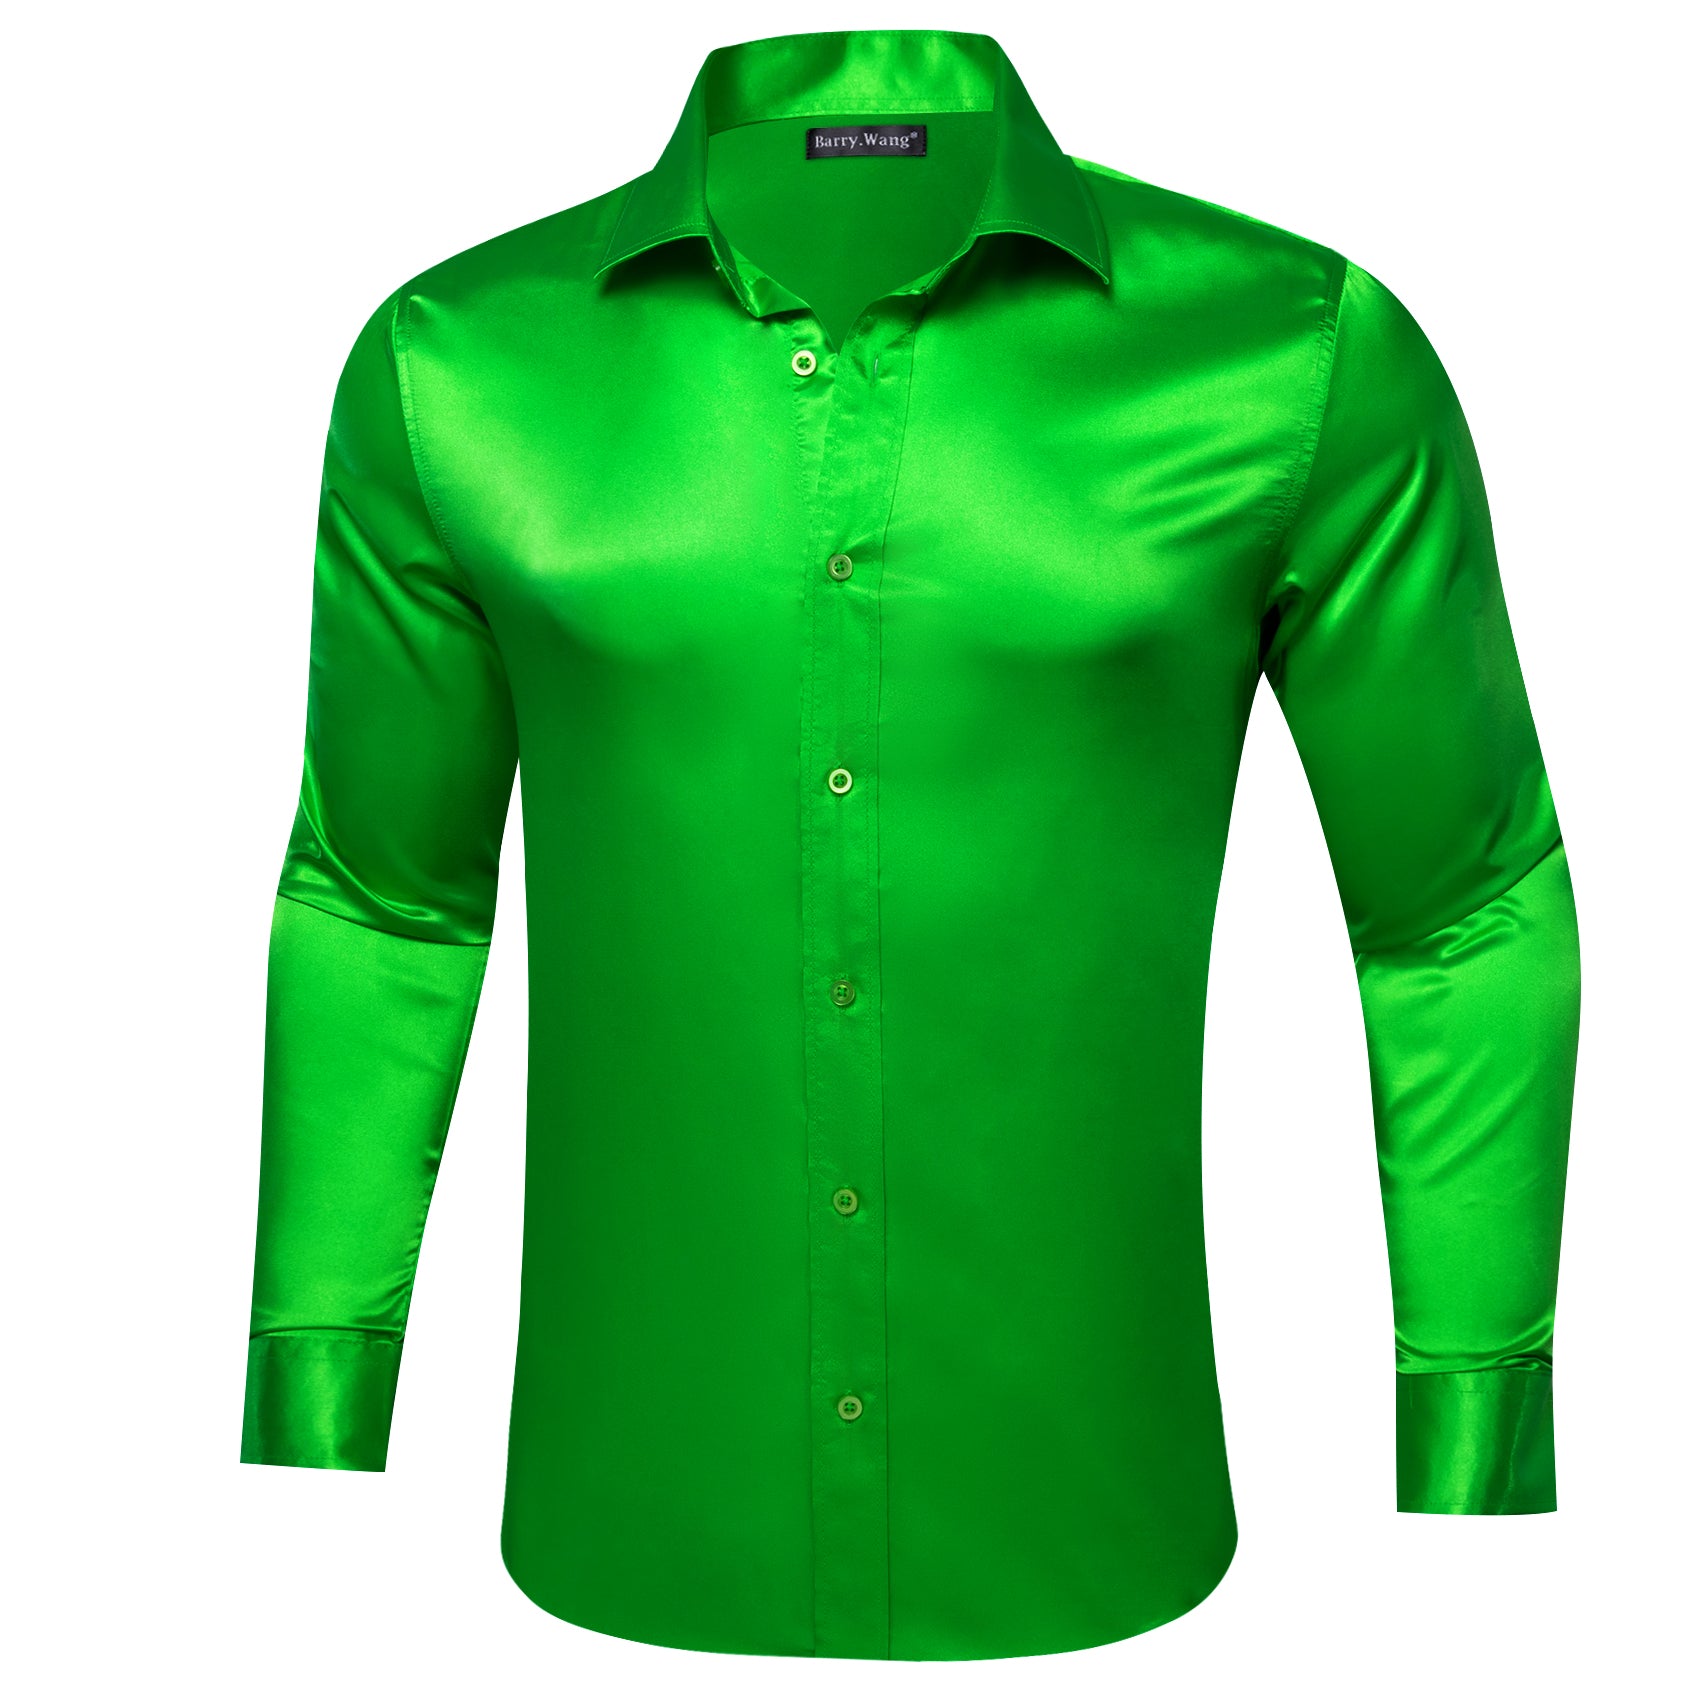 Barry.wang Button Down Shirt Lime Green Solid Silk Long Sleeve Shirt